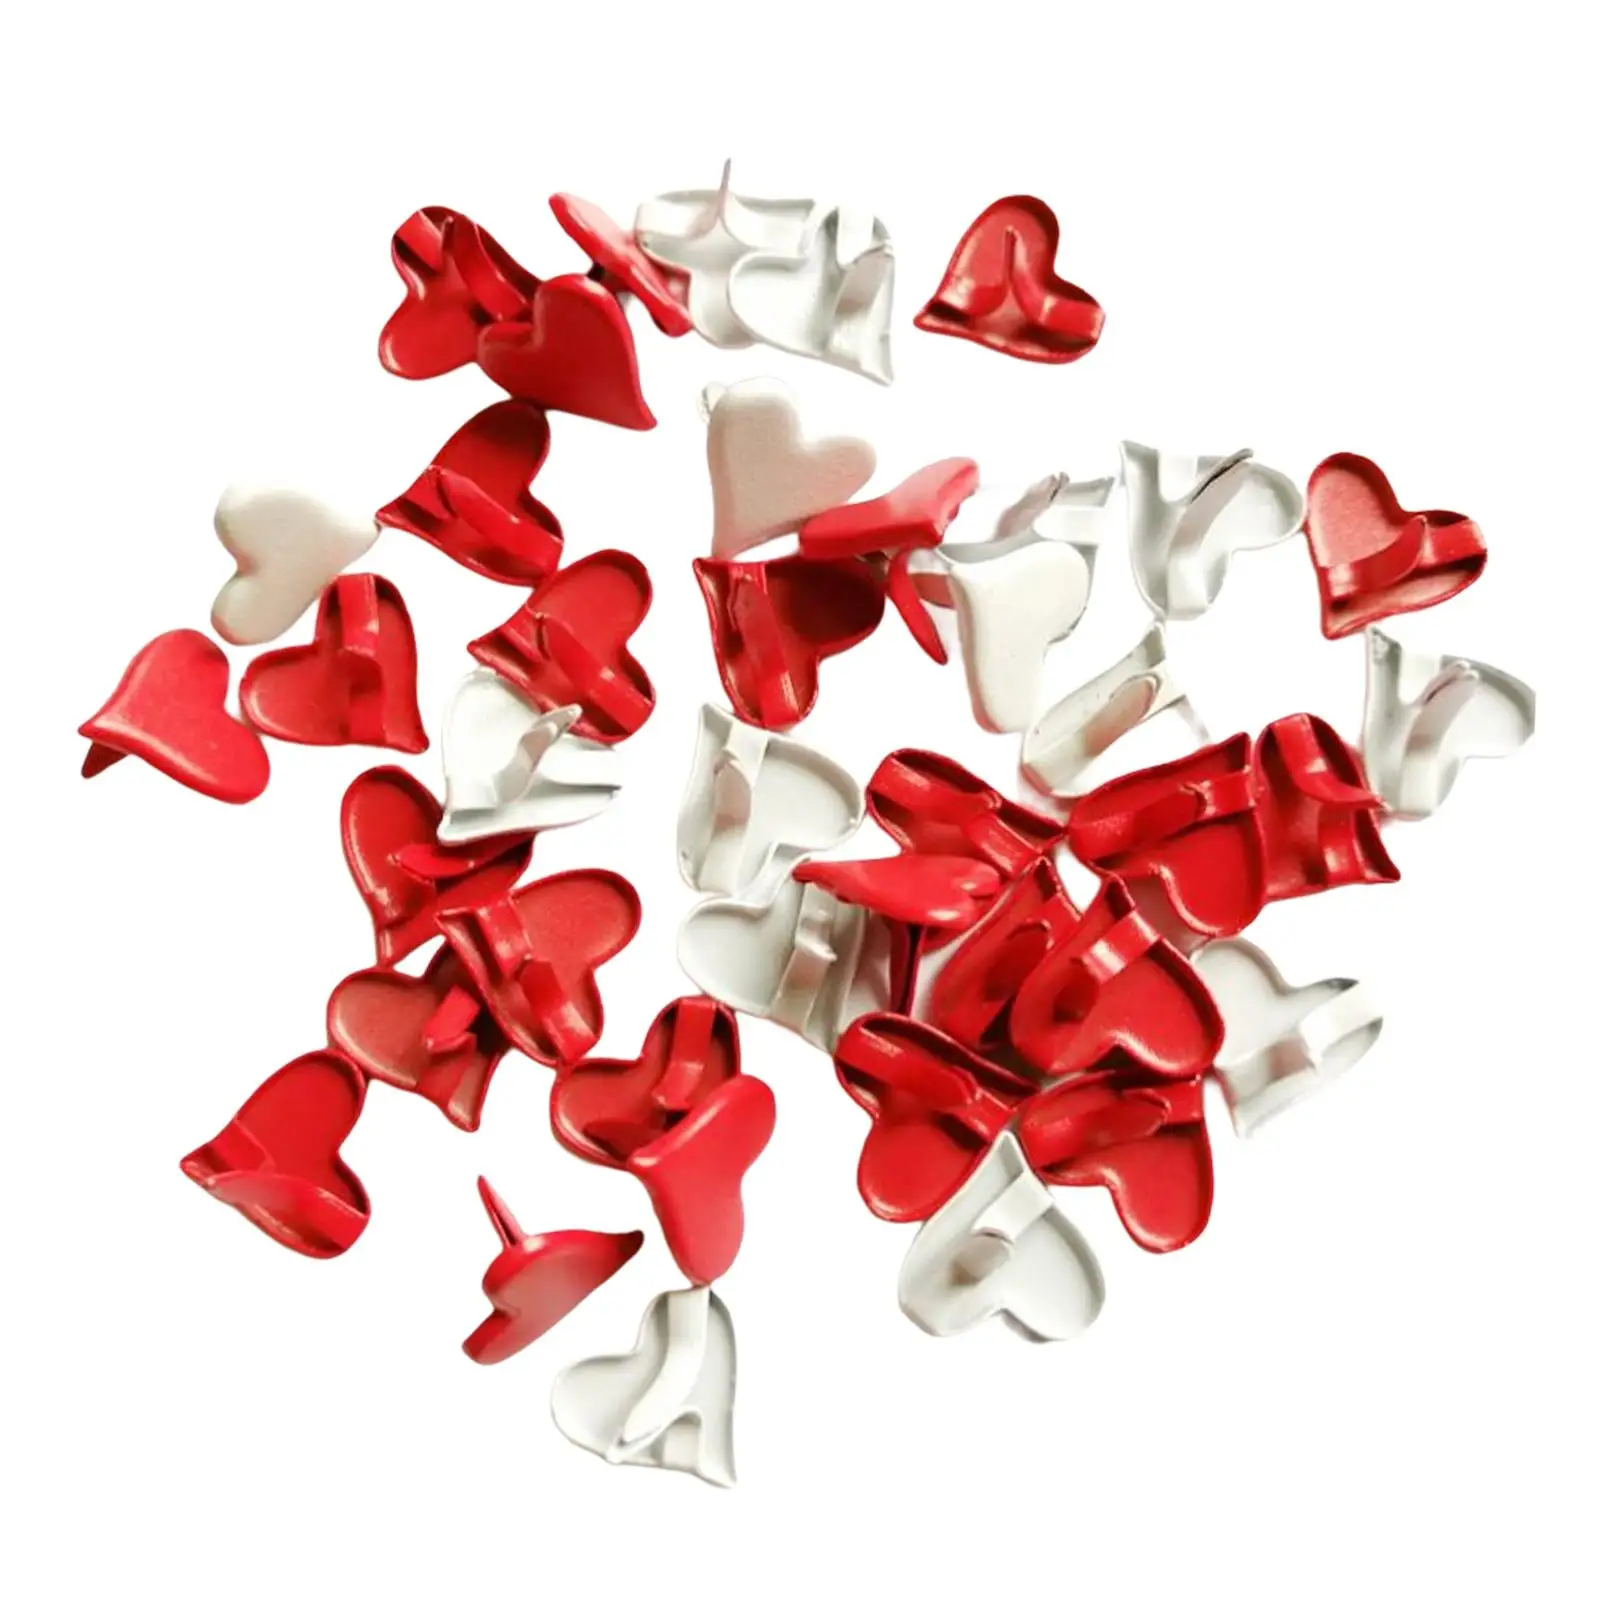 200x Metal Mini Brads Decoration Love Shaped Paper Fasteners for Scrapbook